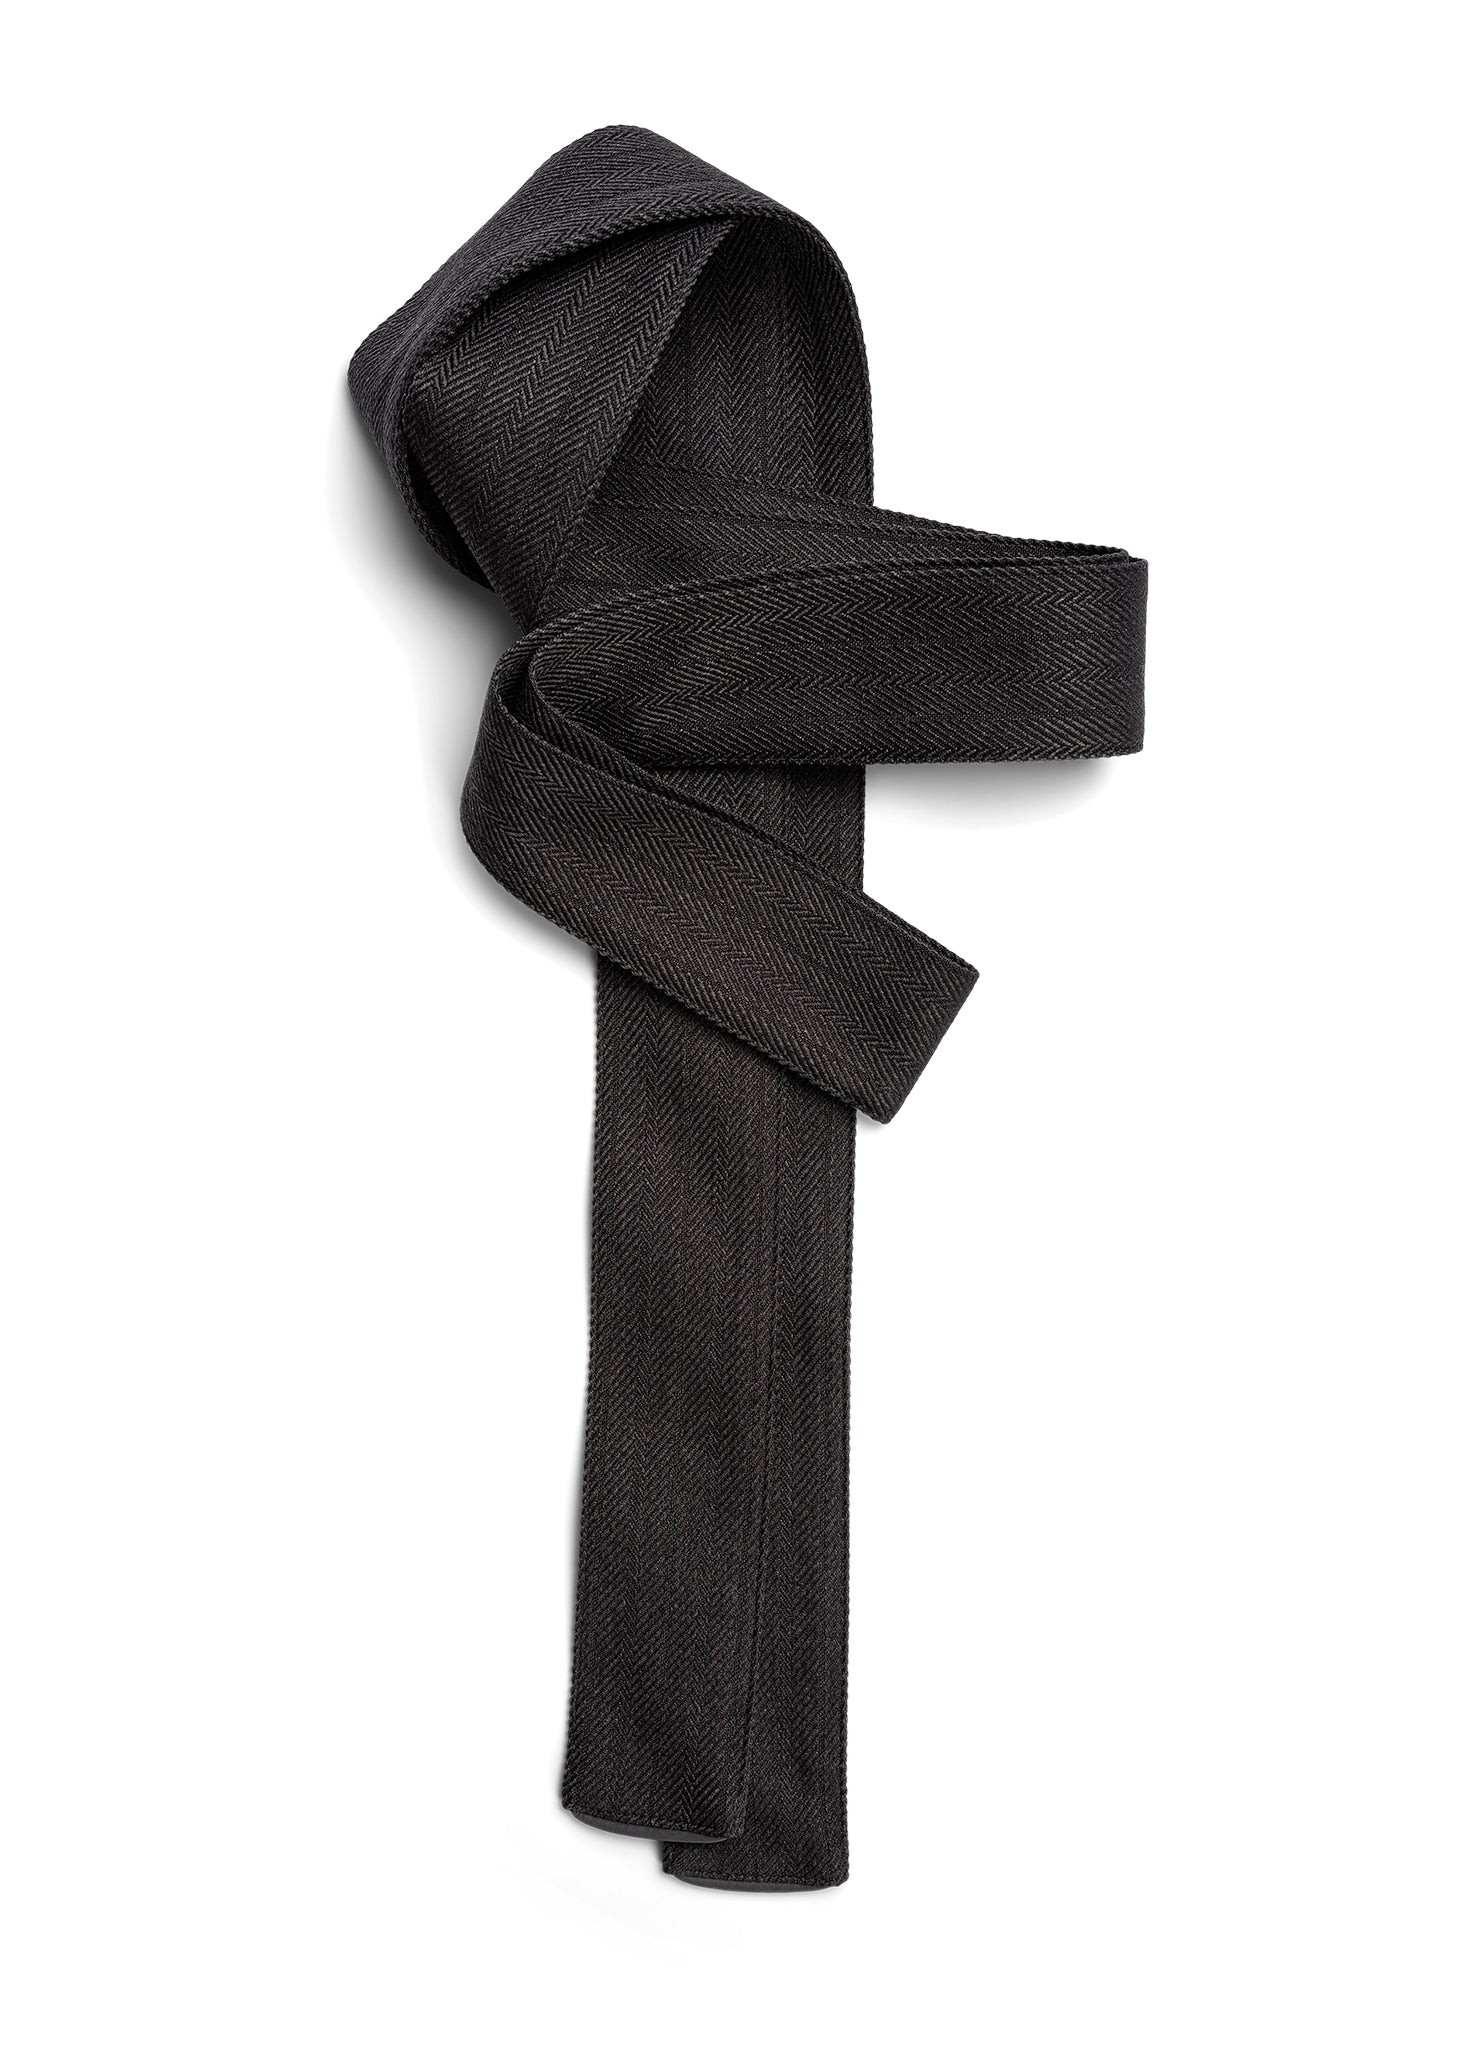 BRGN by Lunde & Gaundal Belt Accessories 097 Black Tweed